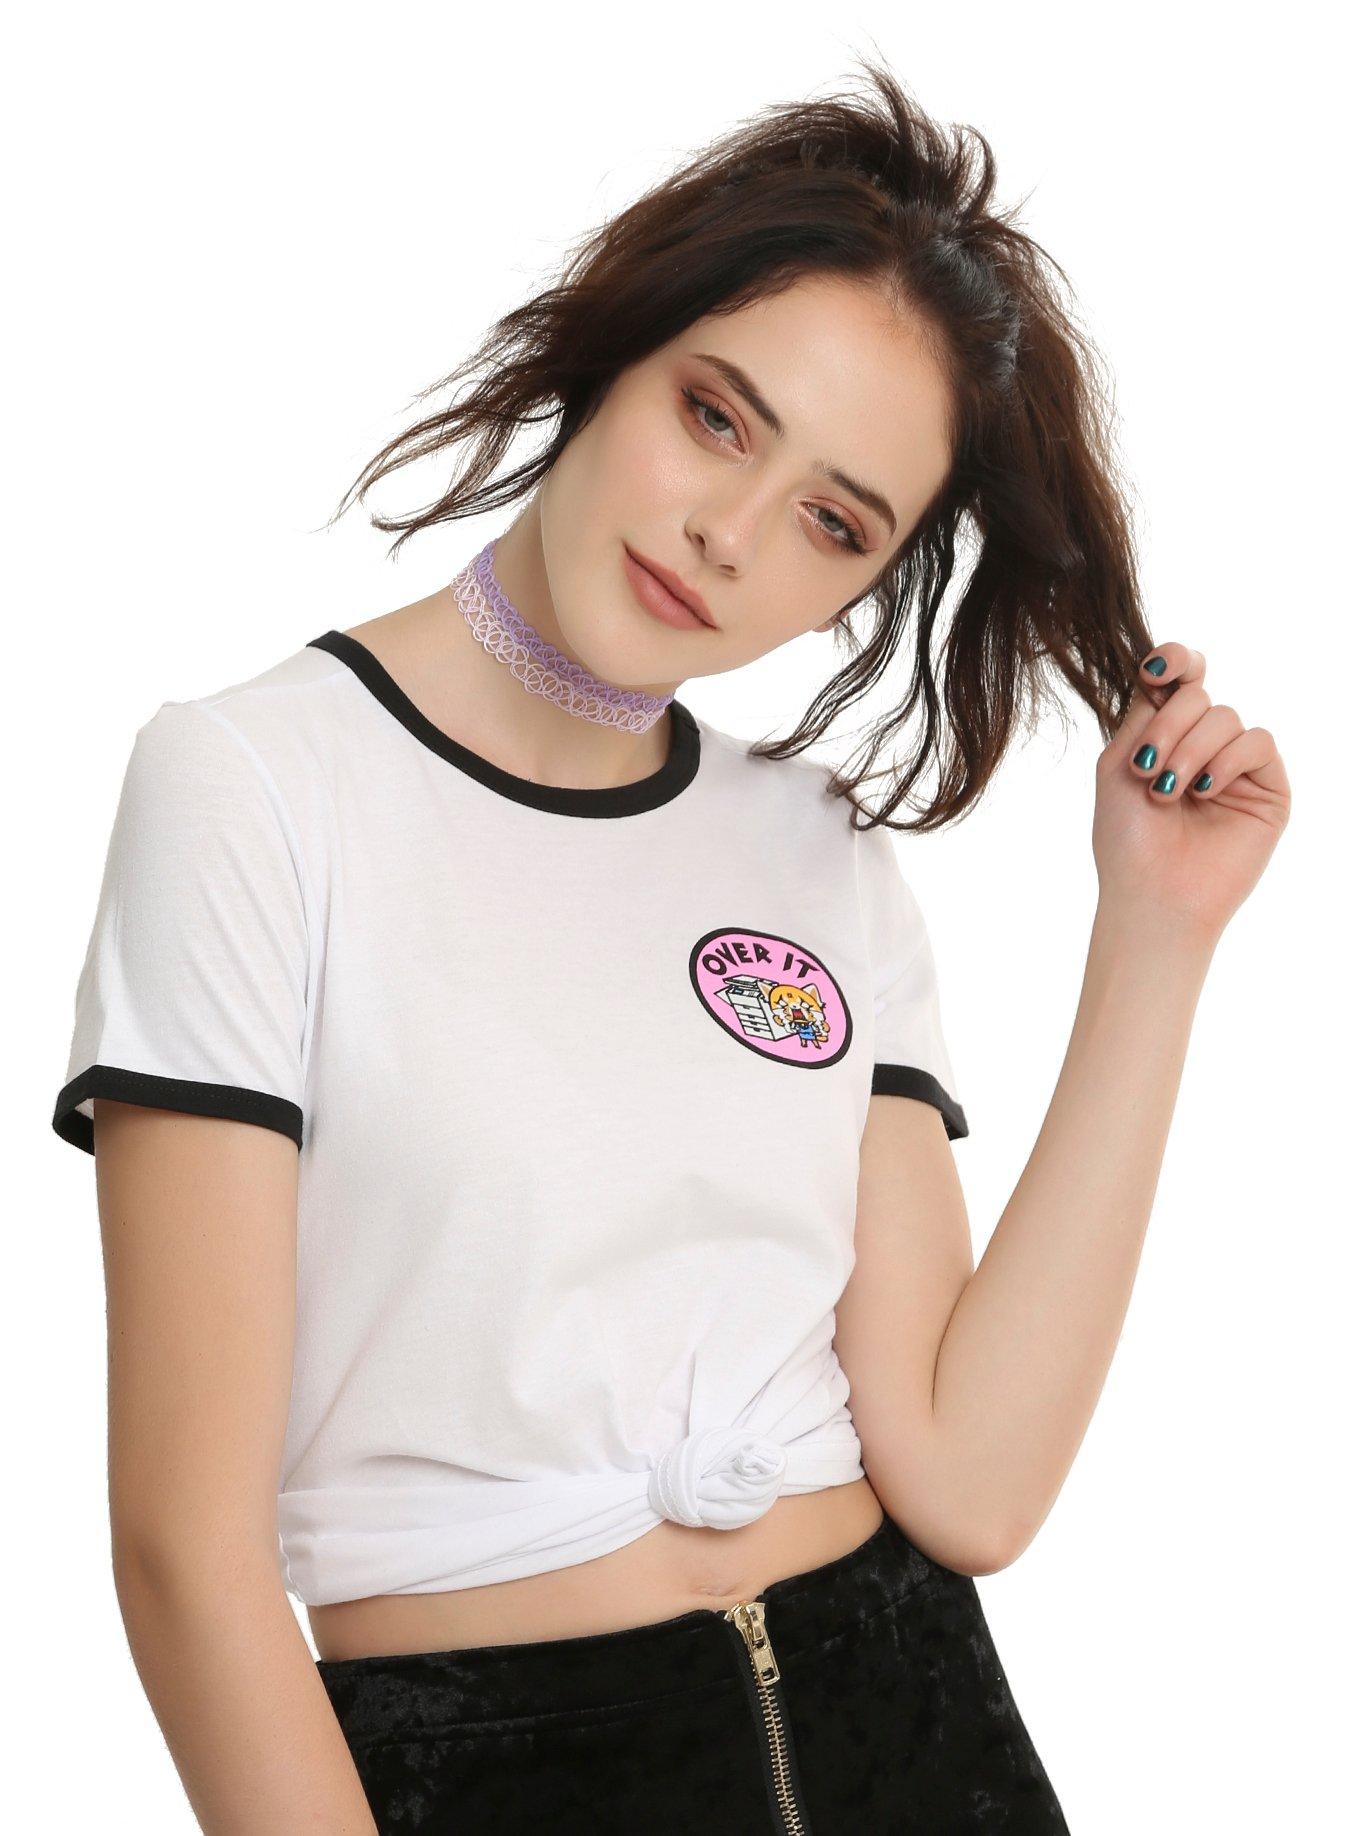 Aggretsuko Over It Girls Ringer T-Shirt, WHITE, hi-res